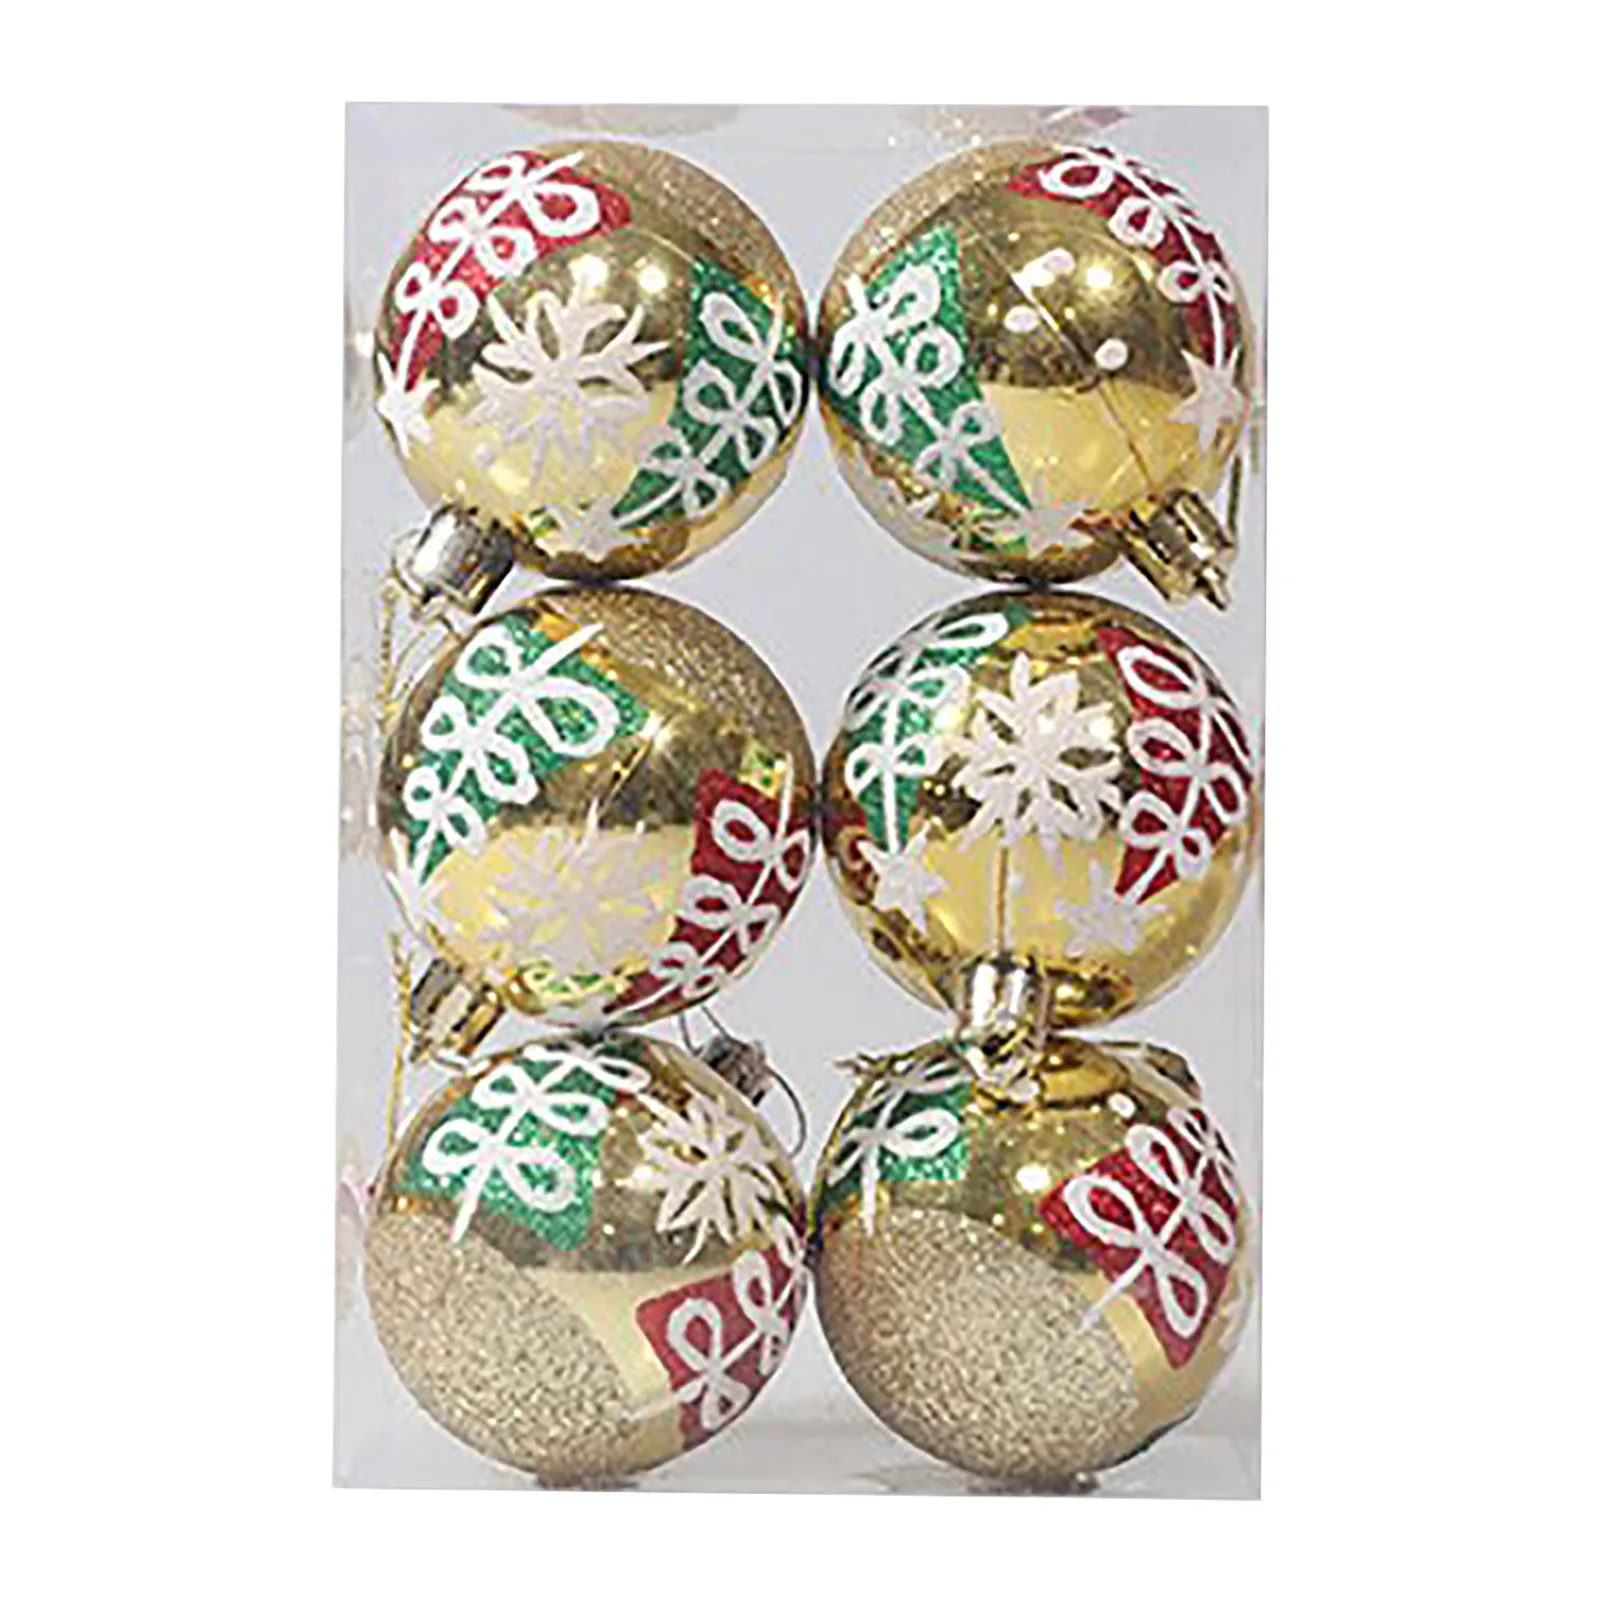 6pcs/box Colorful Christmas Ball Ornaments Xmas Tree Decoration